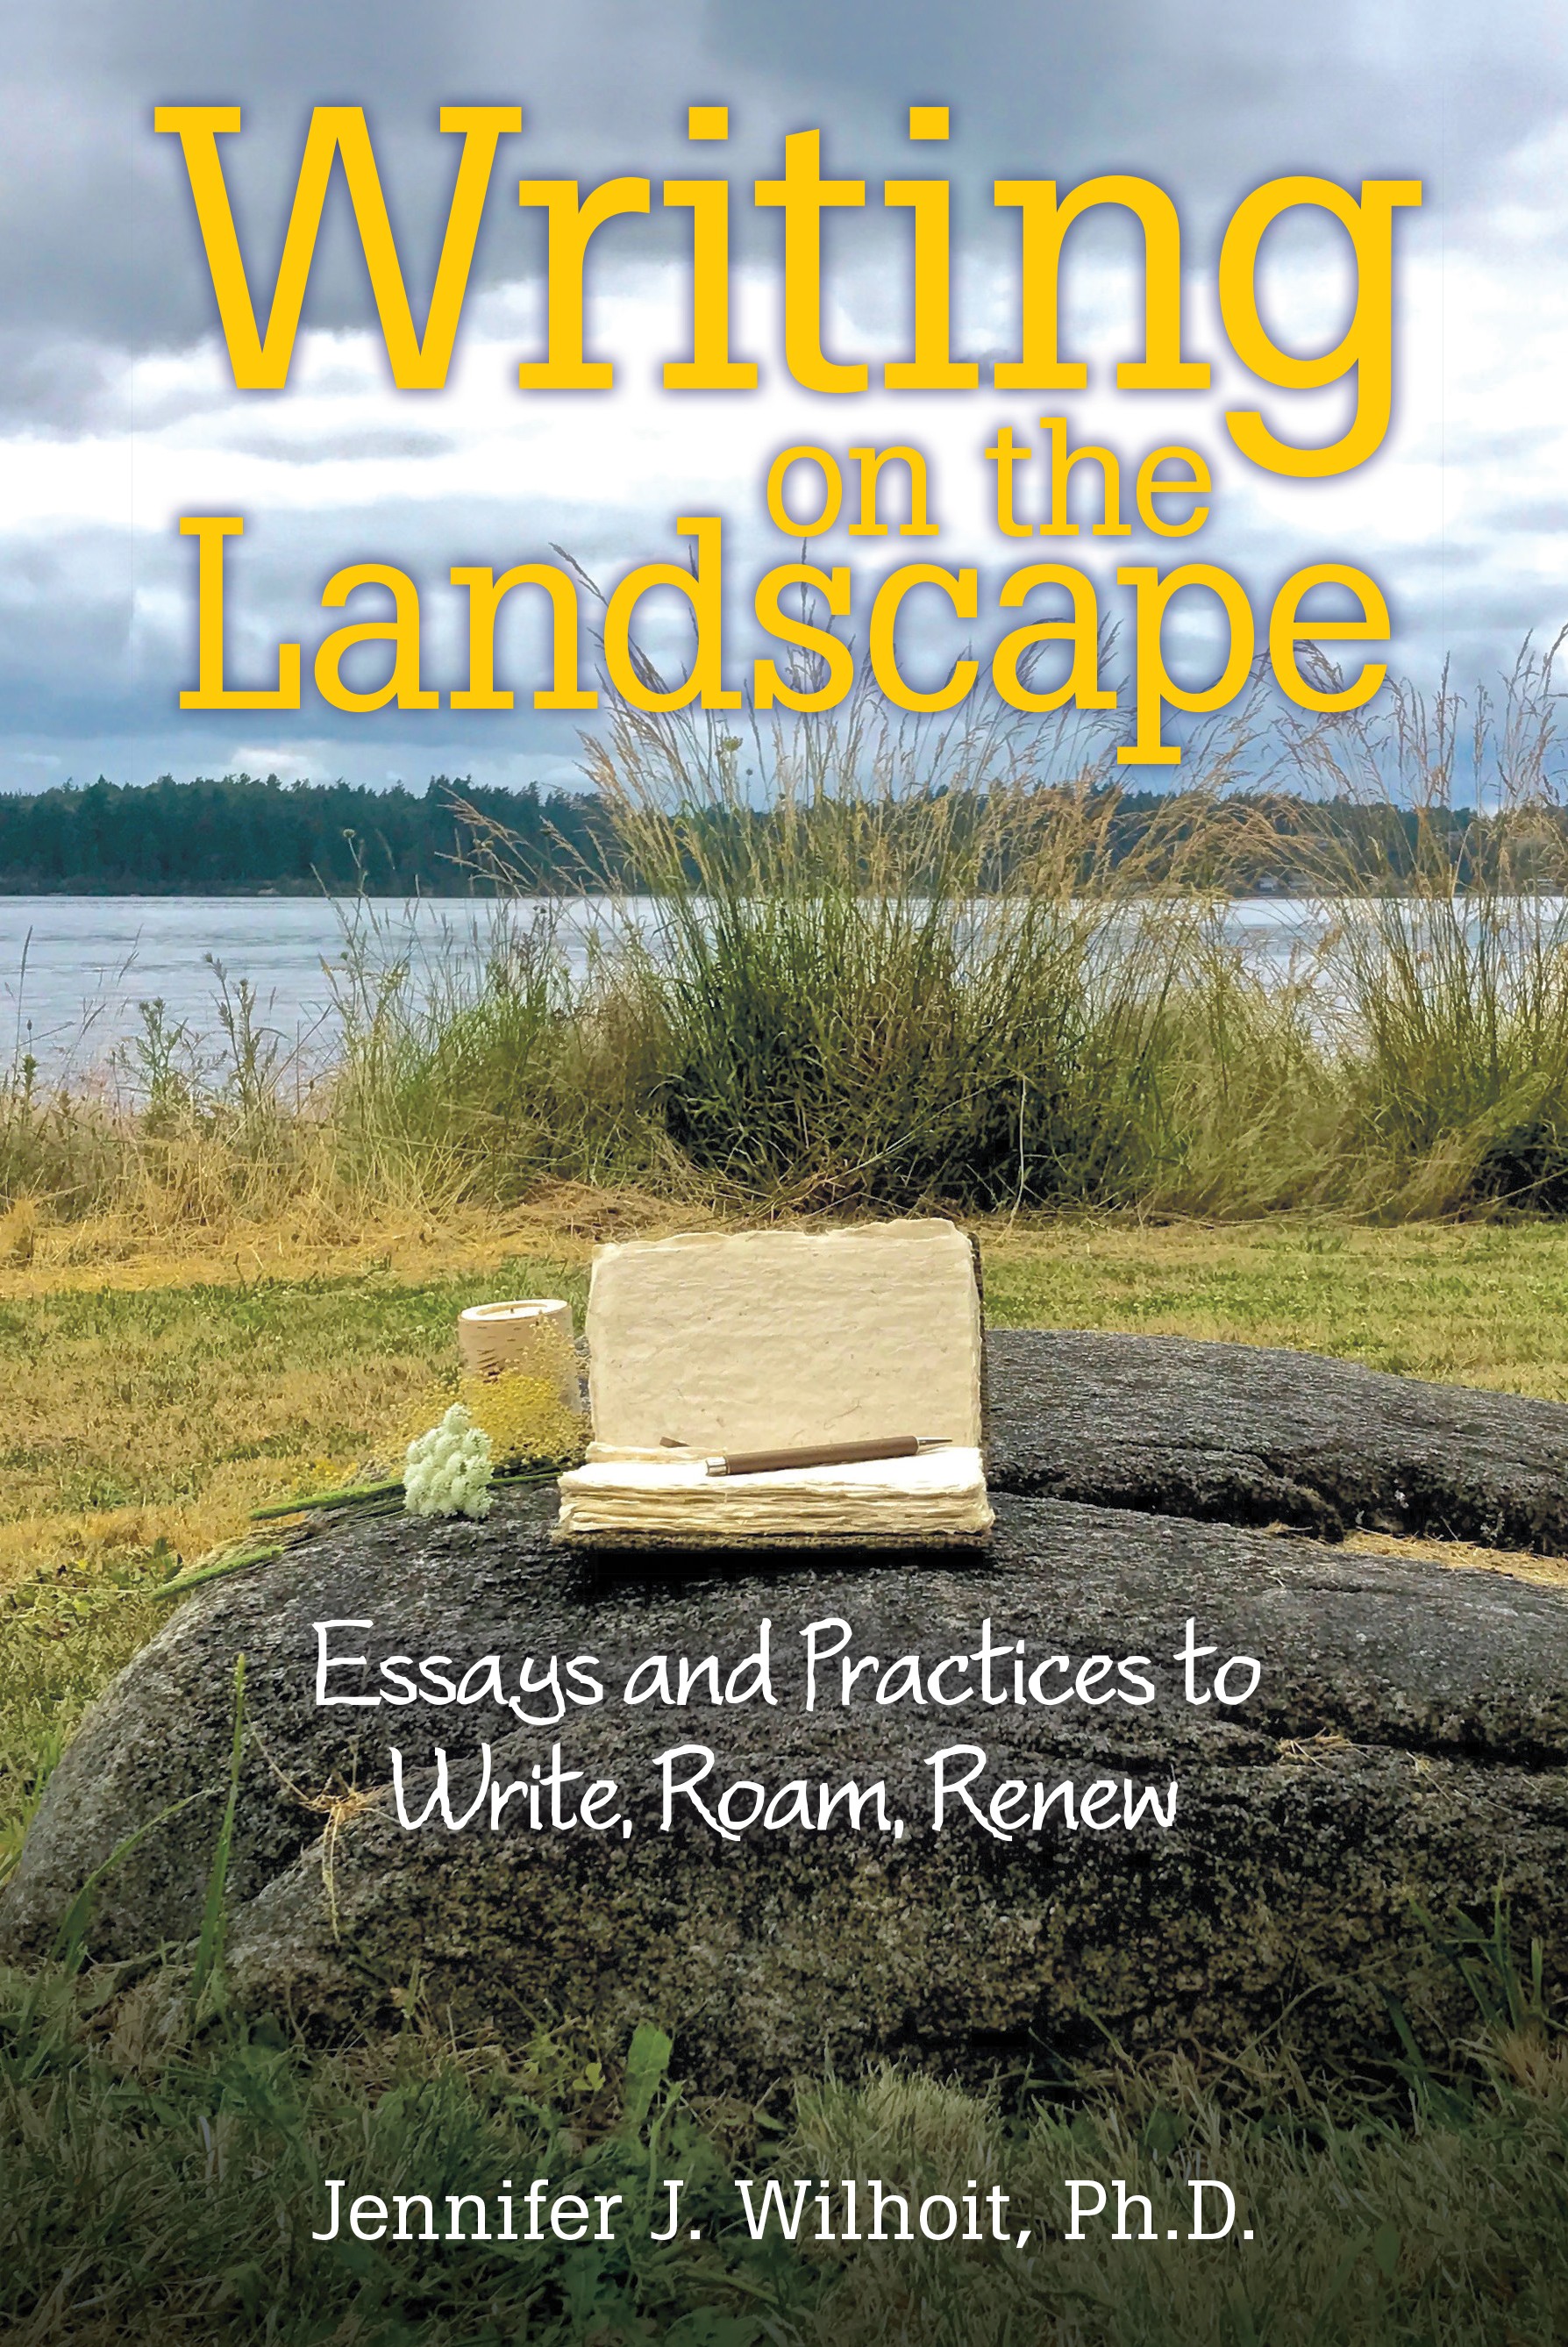 Reader's Digest - Writing on the Landscape